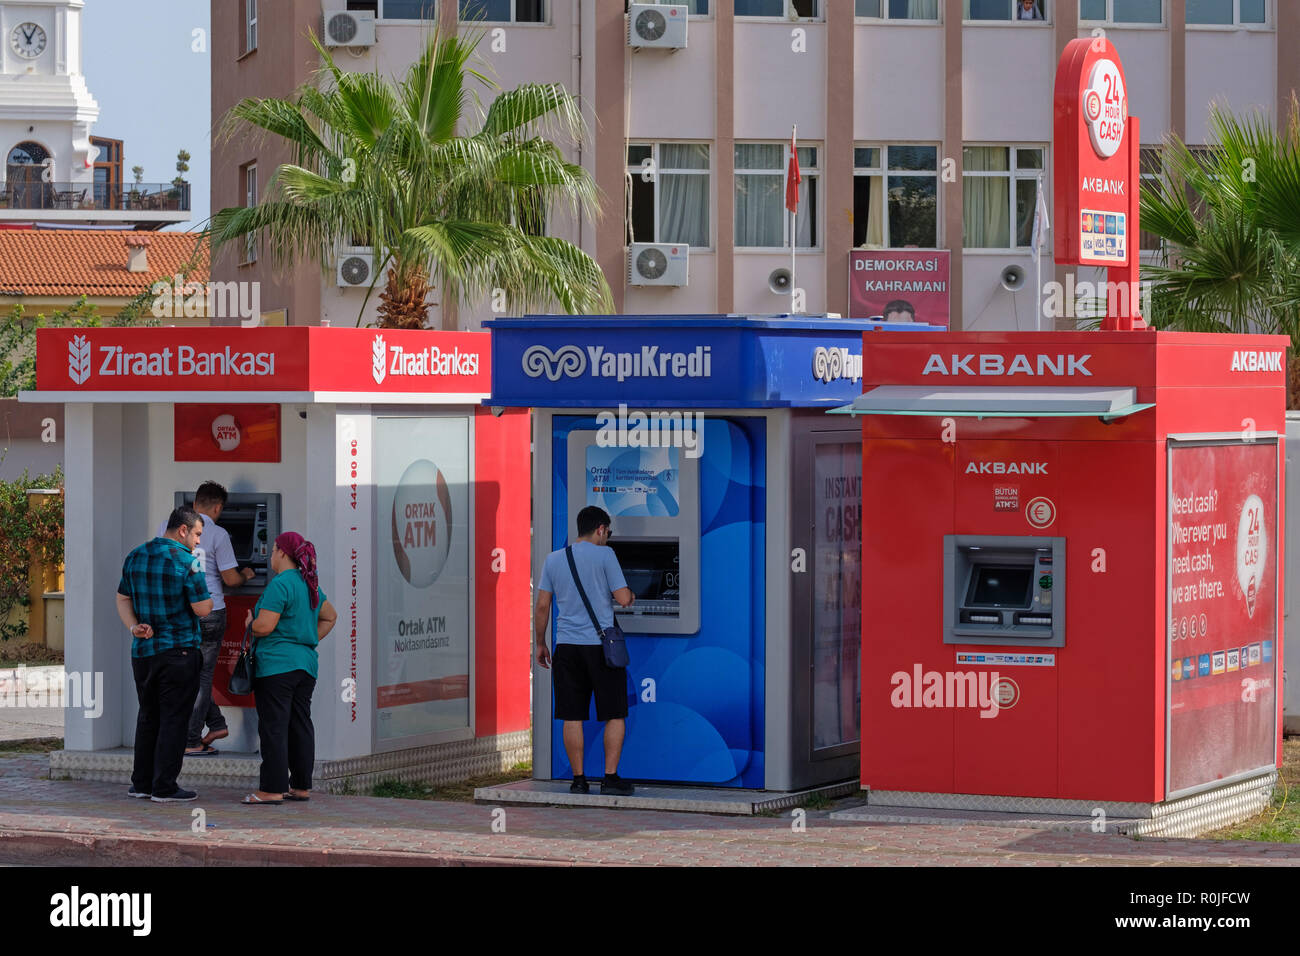 People using Ziraat Bankasi, YapiKredi and Akbank ATM machines in Kemer, Turkey Stock Photo